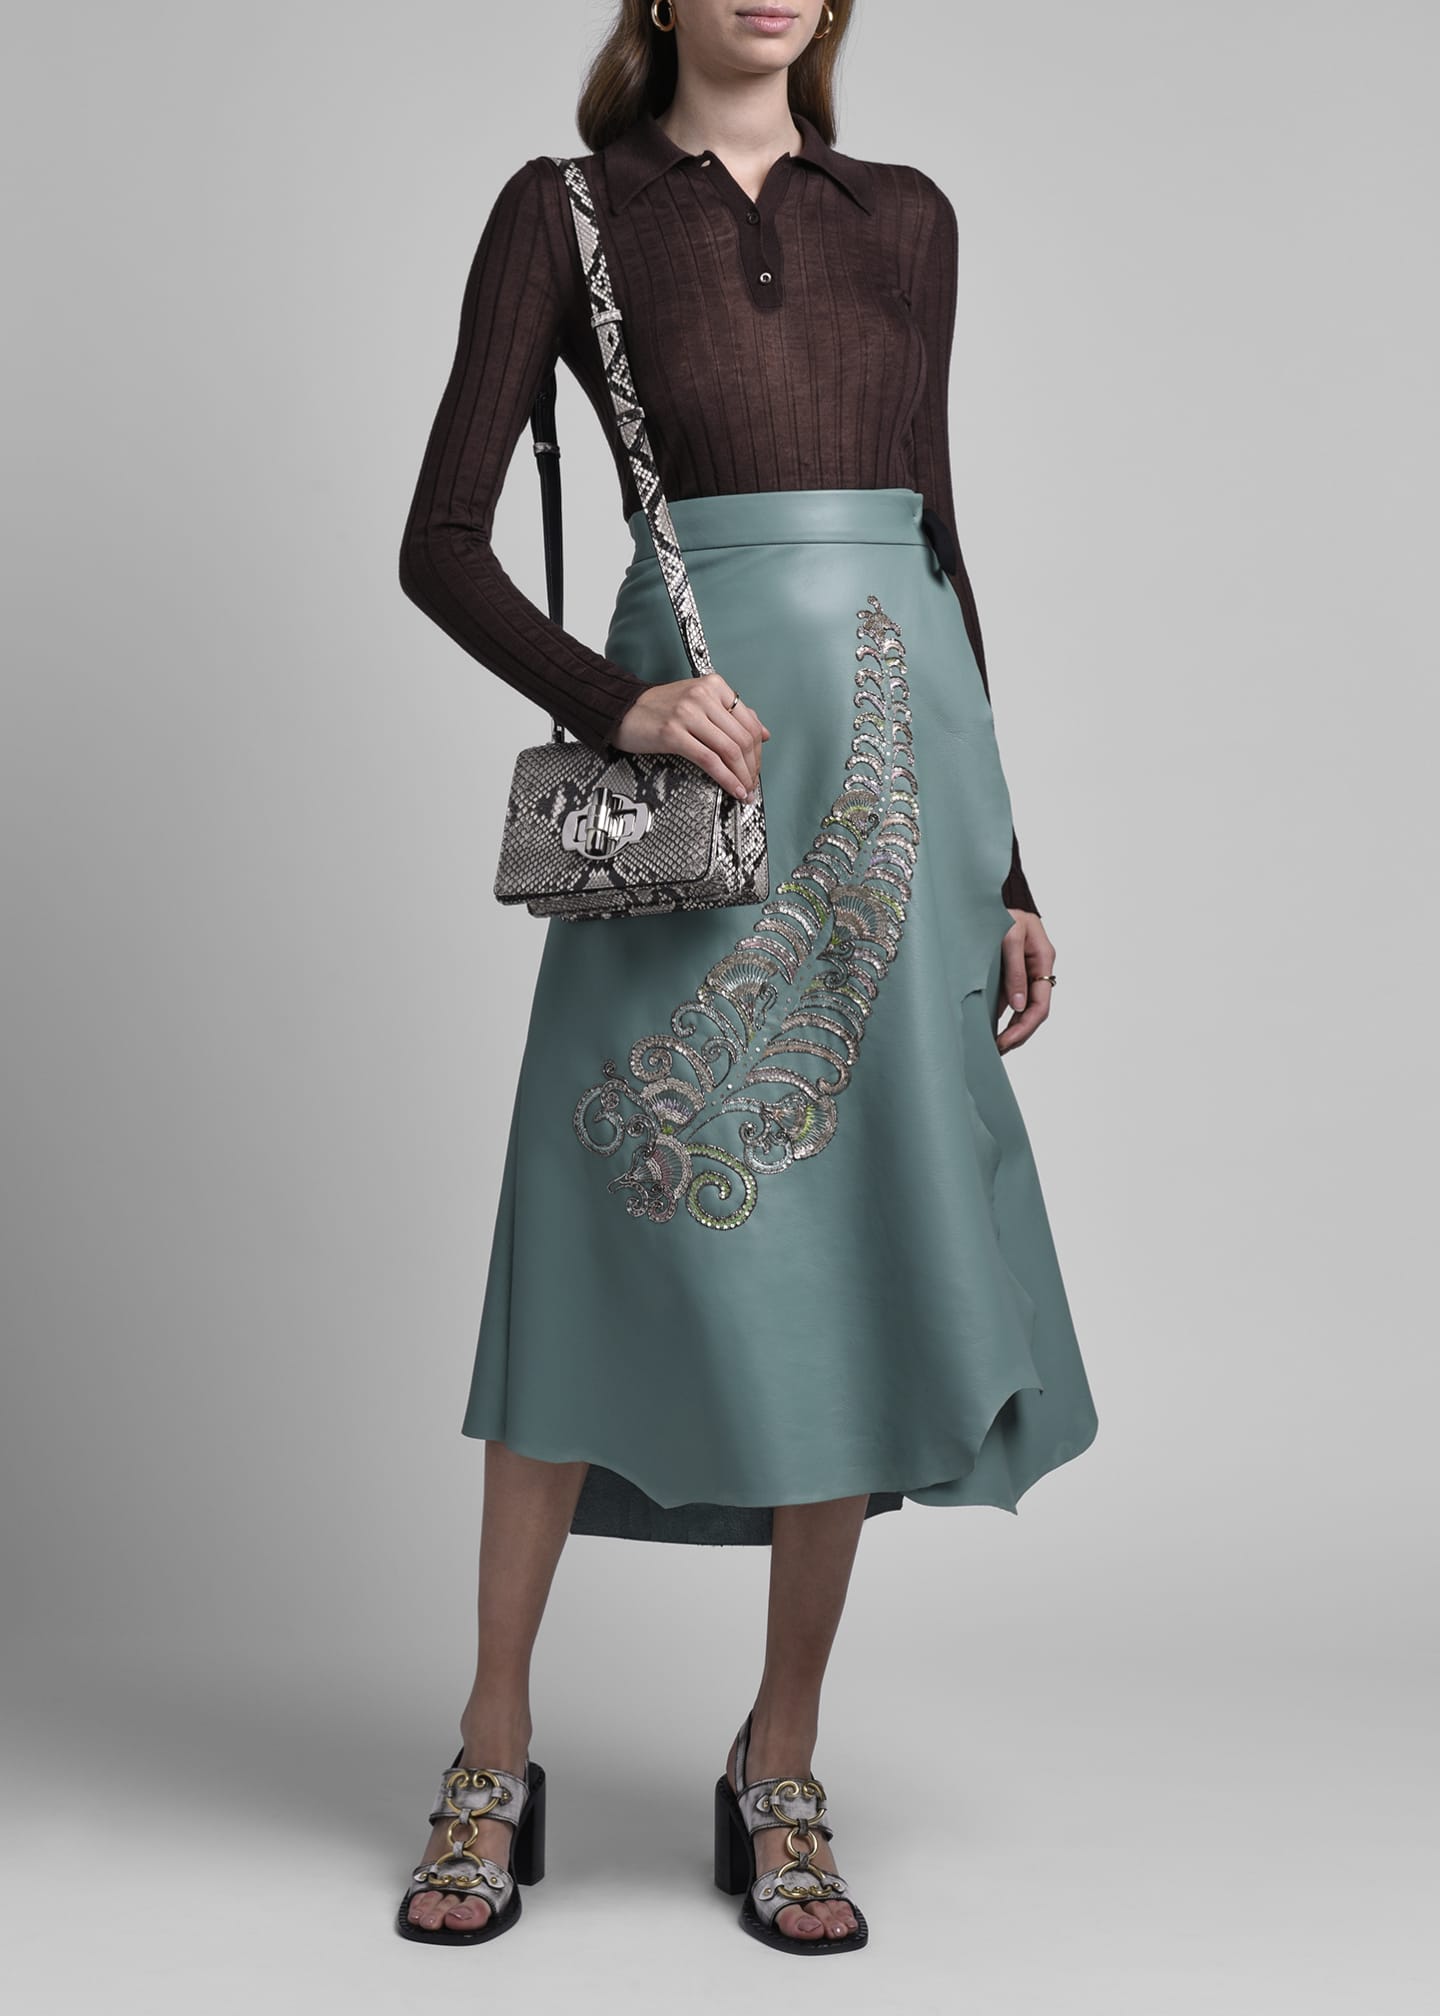 Prada Beaded Feather Embroidered Leather Skirt - Bergdorf Goodman